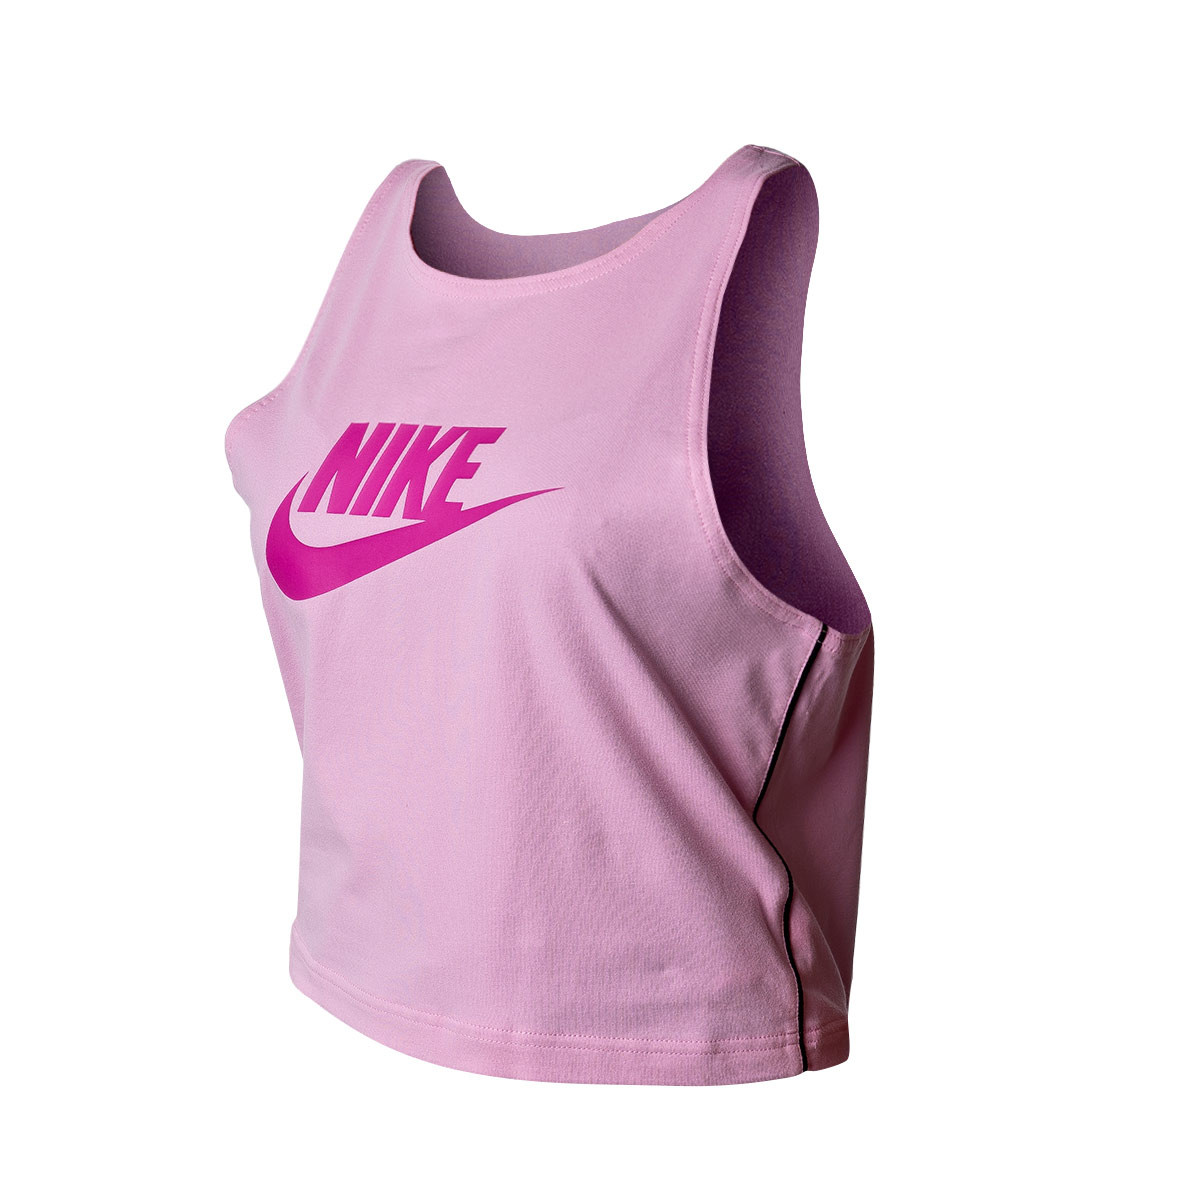 nike sportswear heritage pink